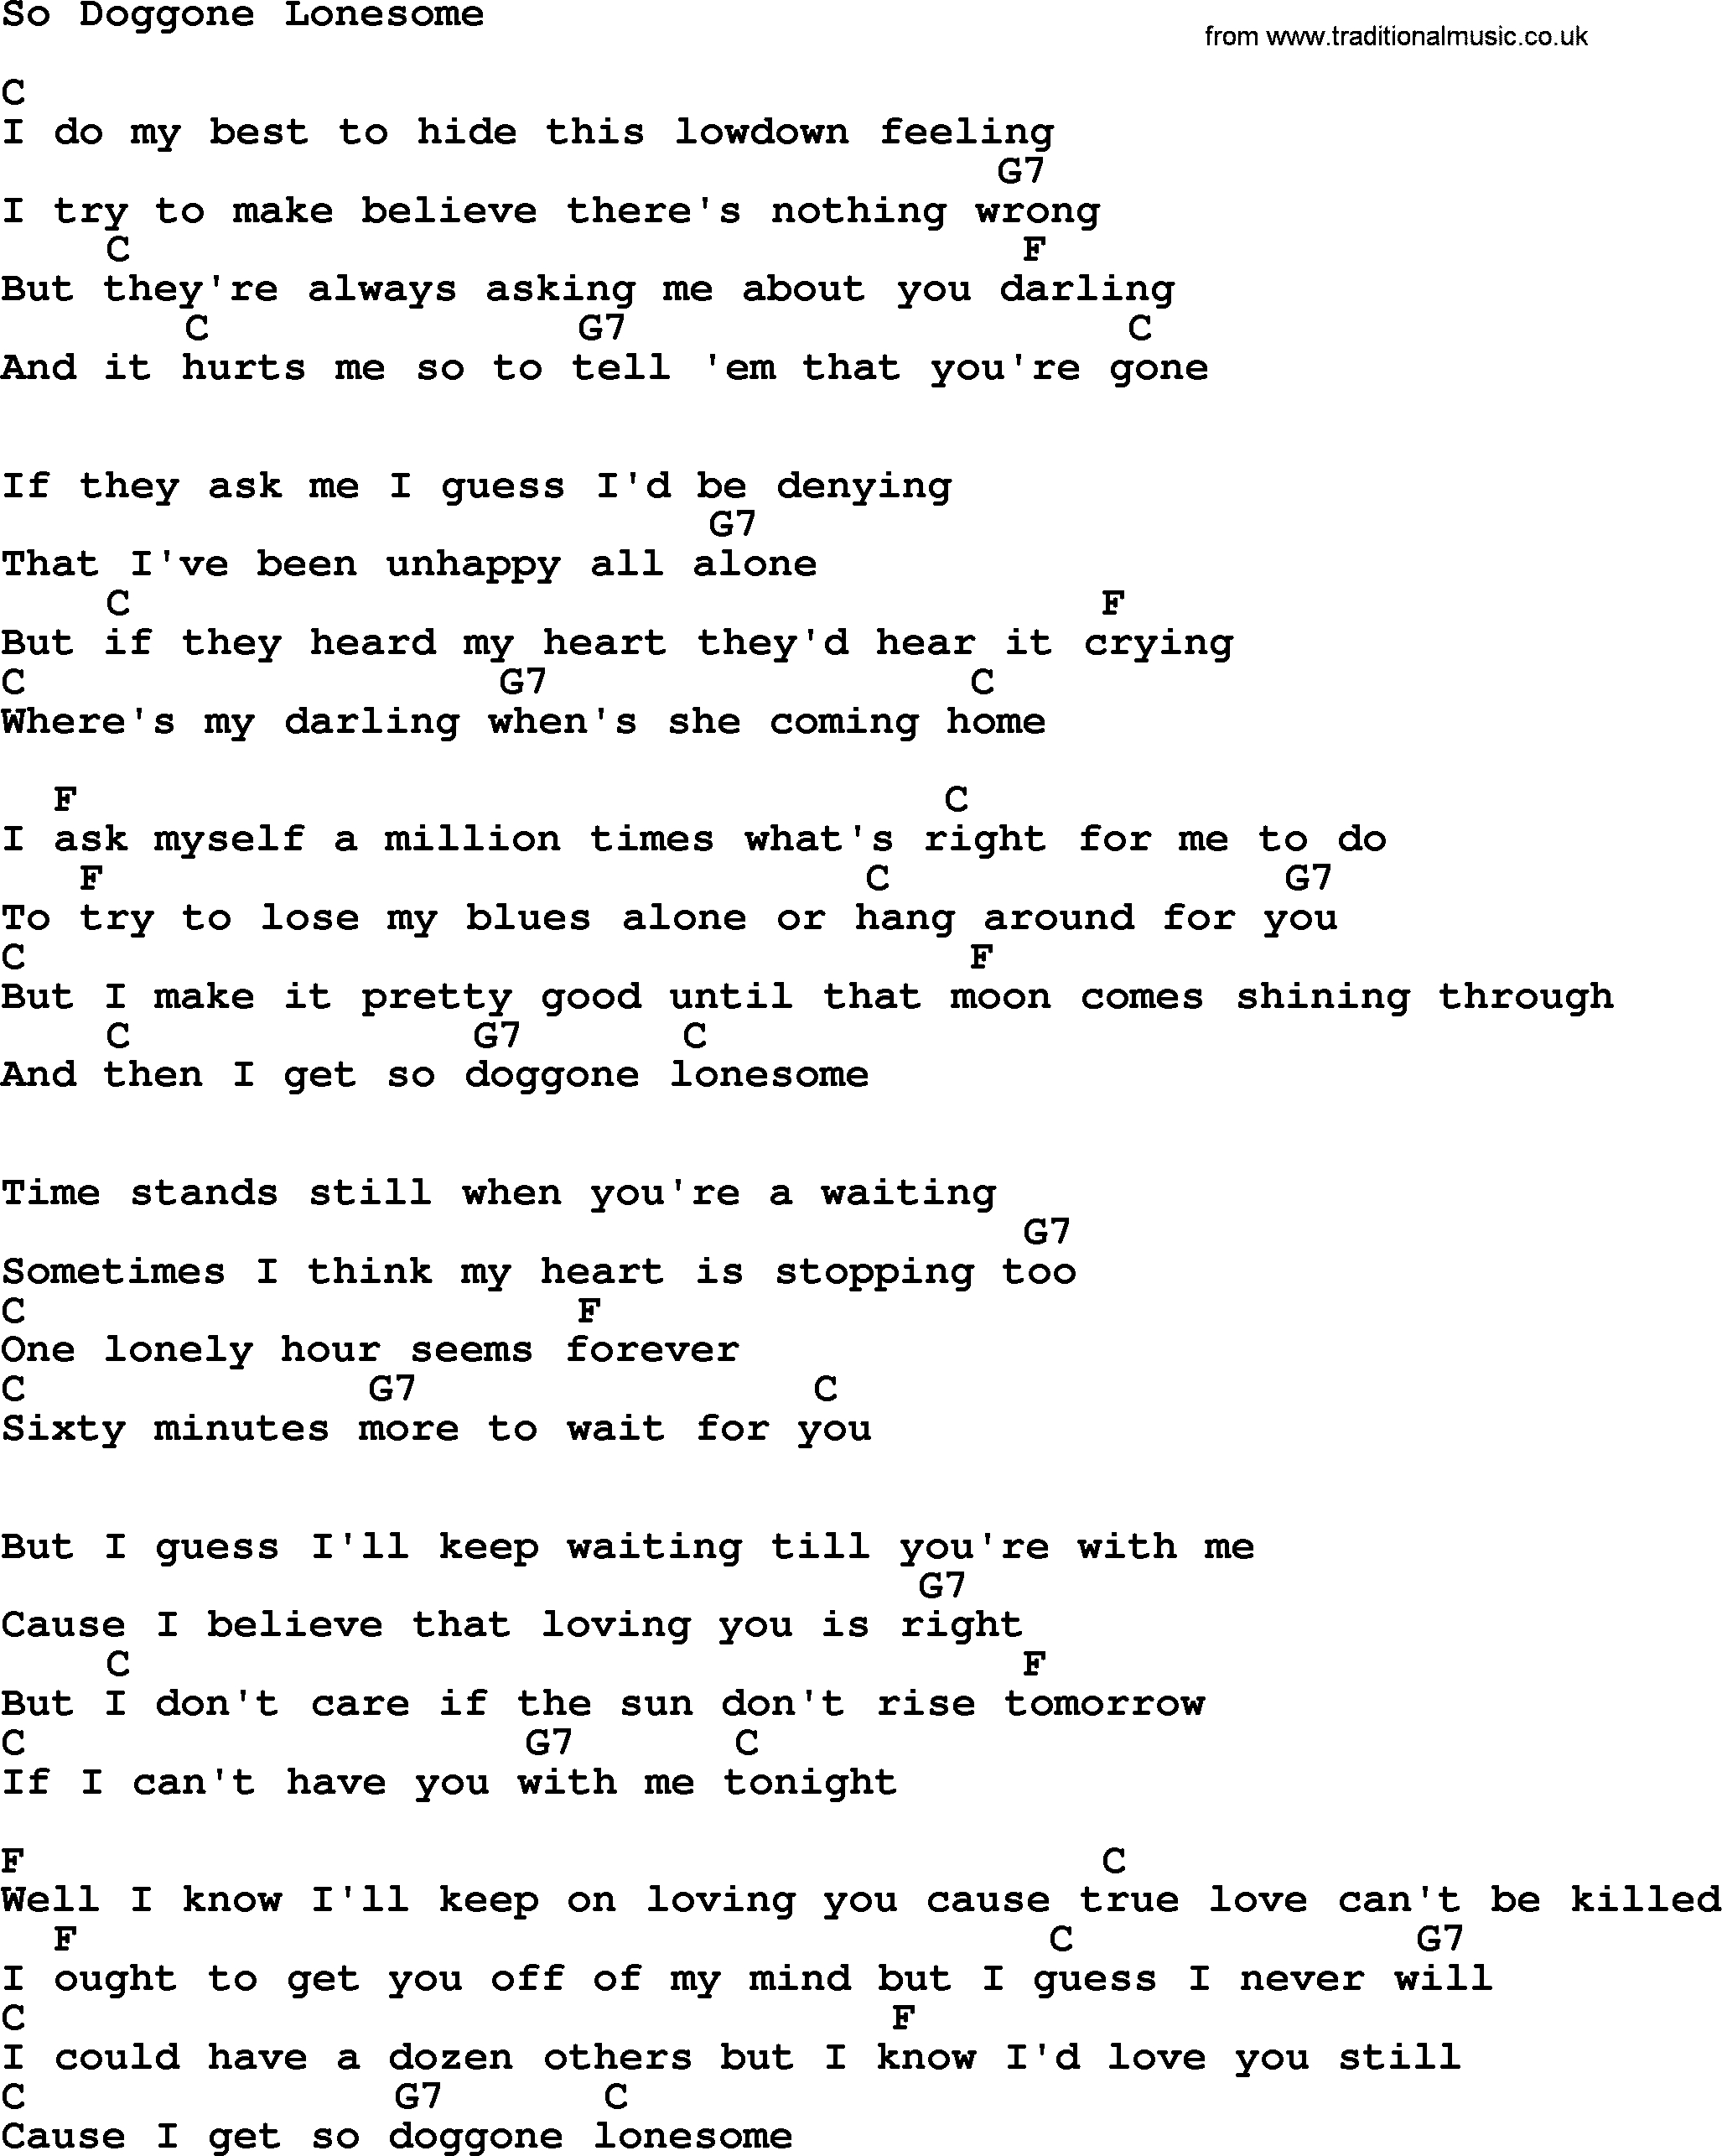 Wagon Wheel Chords Johnny Cash Song So Doggone Lonesome Lyrics And Chords